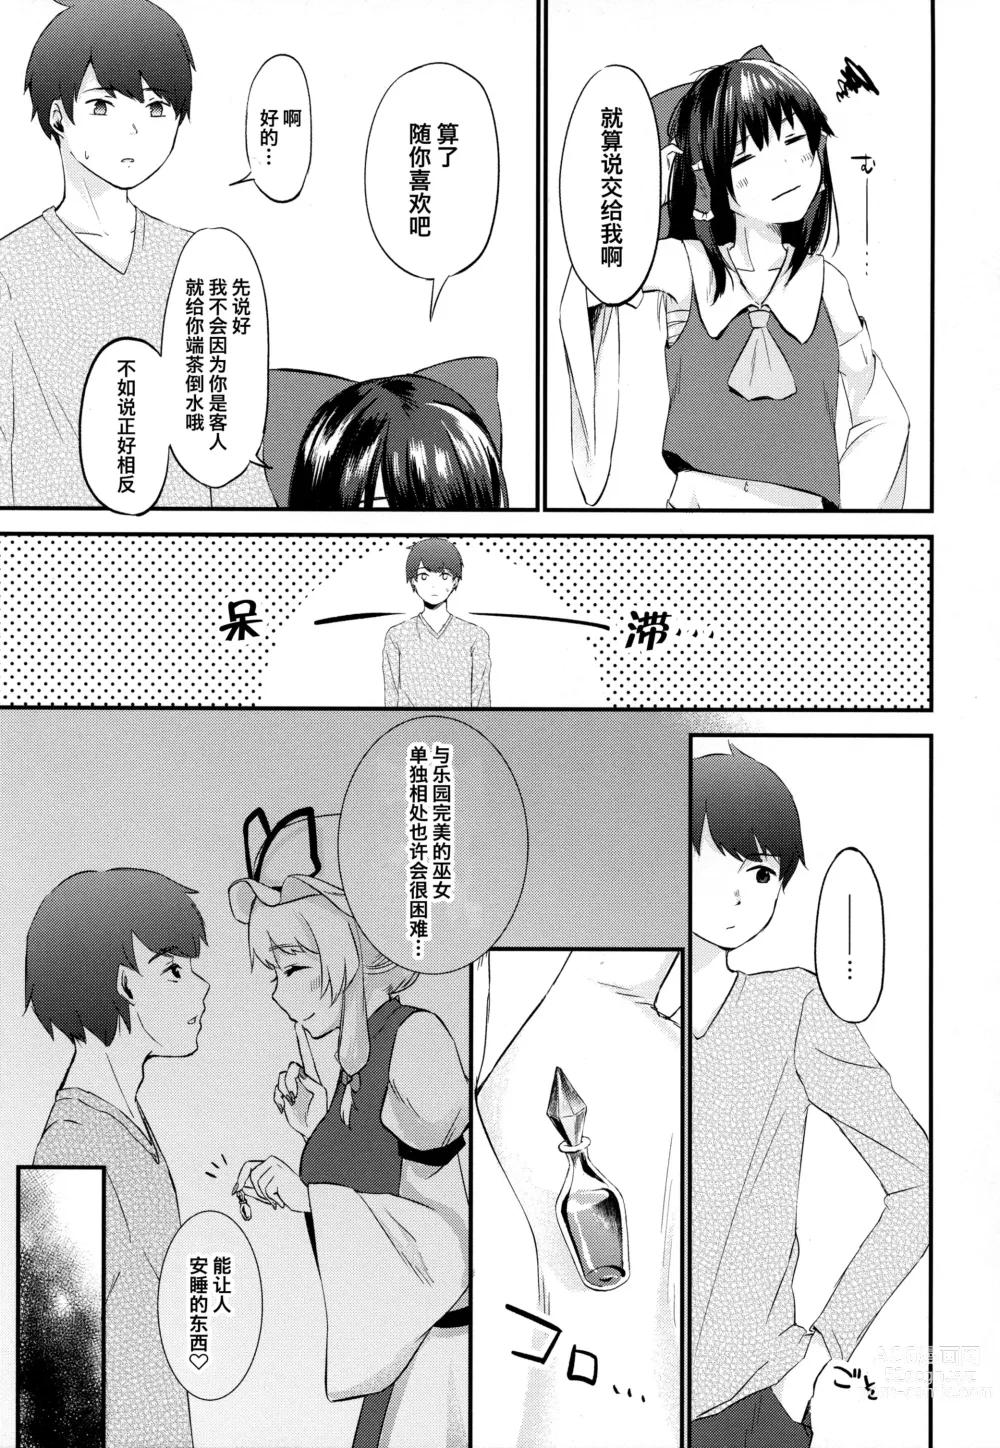 Page 17 of doujinshi 发现了灵梦可爱之处的两人制作了色情的合同志